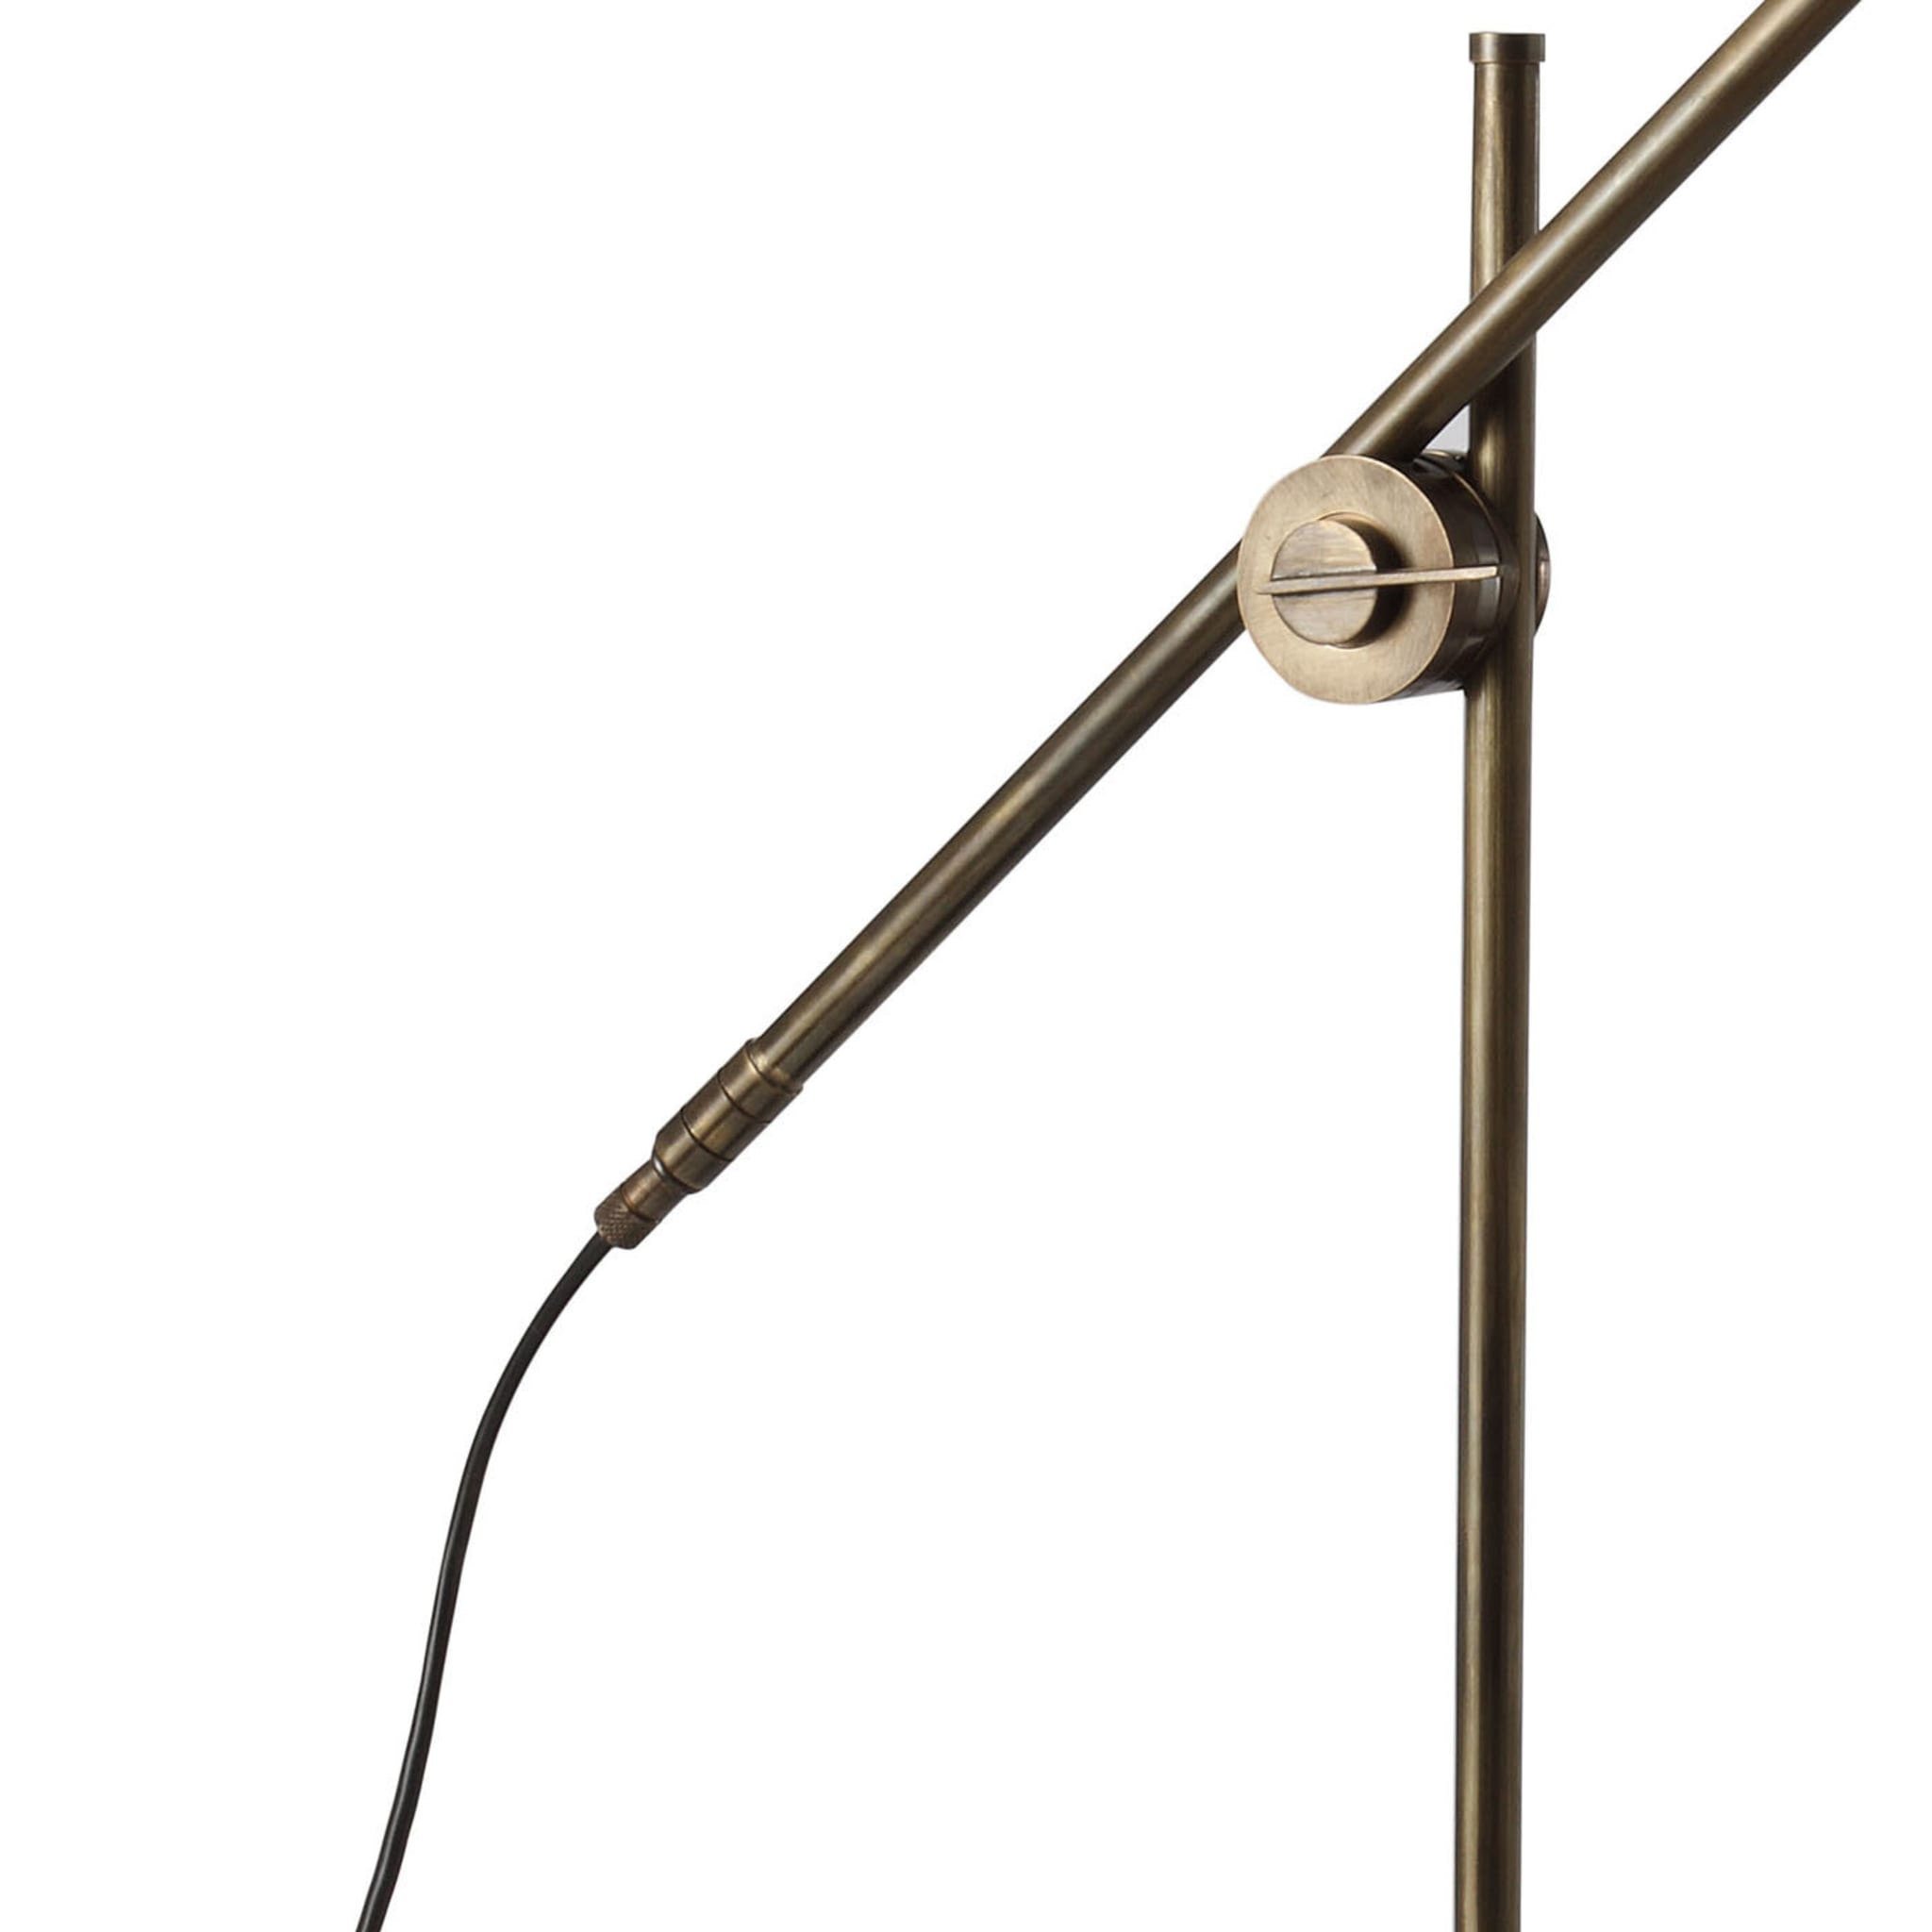 Kursa Desk Lamp in Bronzed Brass - Alternative view 3